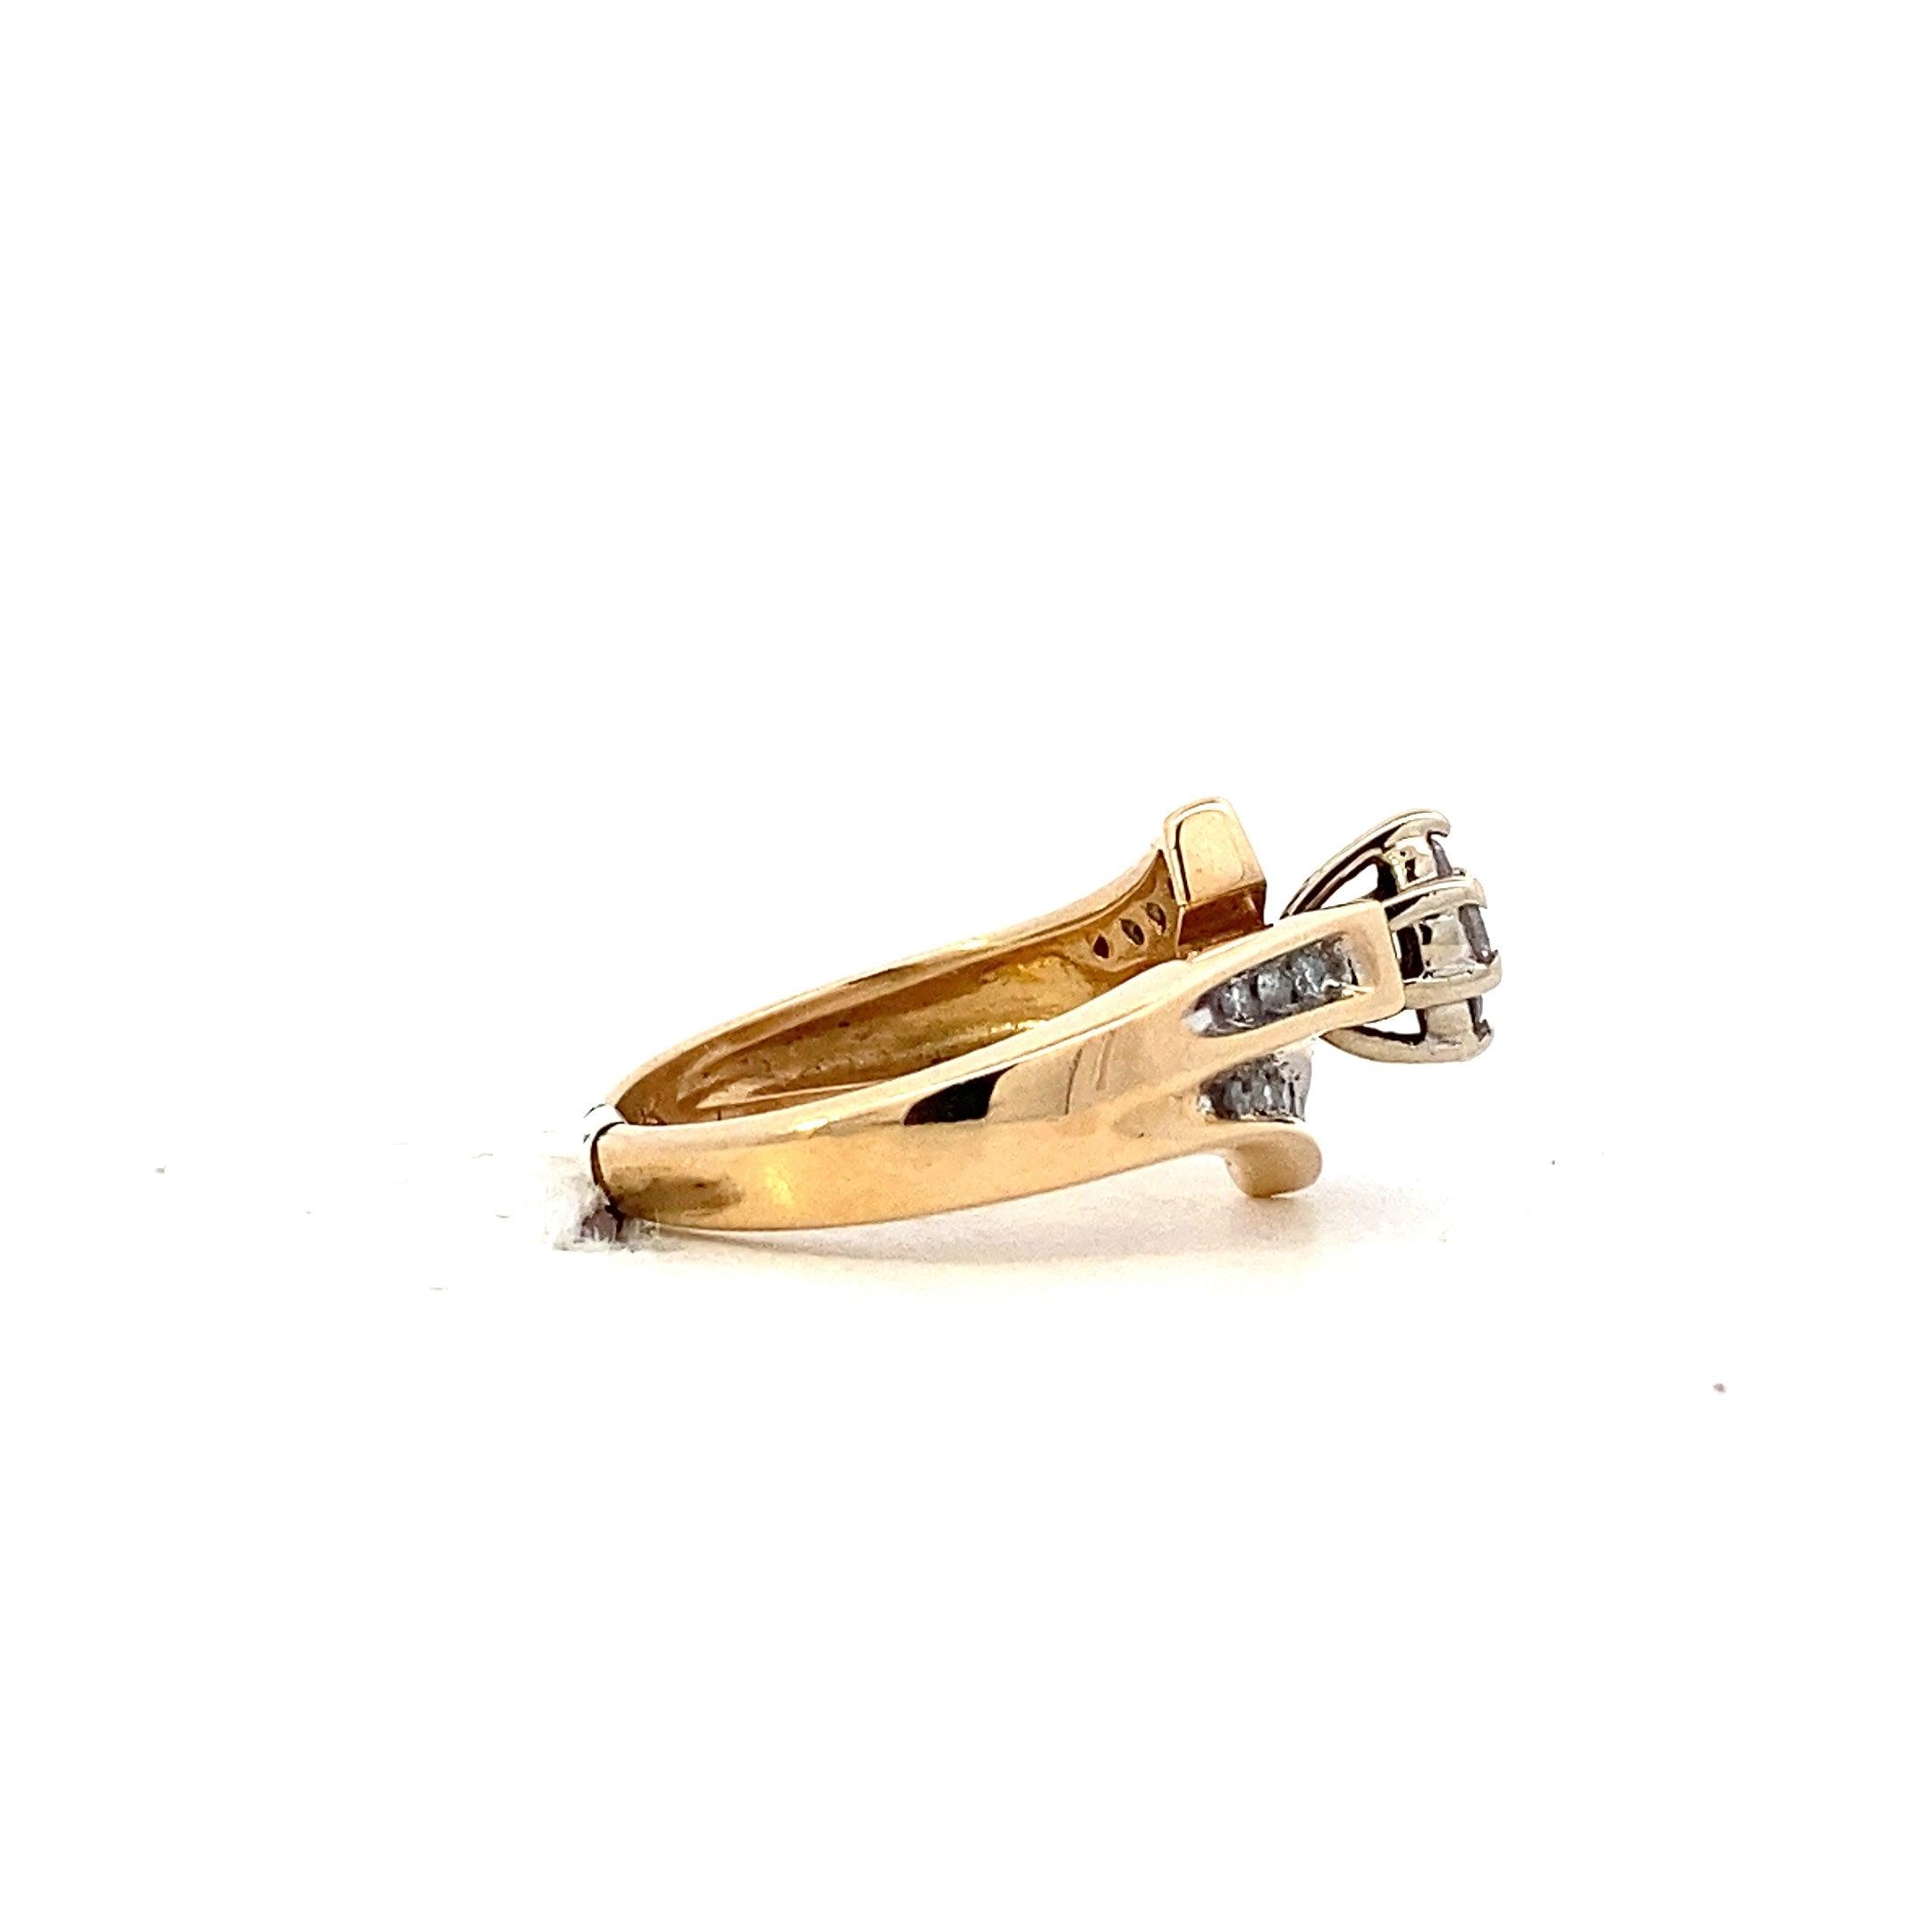 14K Yellow & White Gold Diamond Ring - 0.54ct - ipawnishop.com